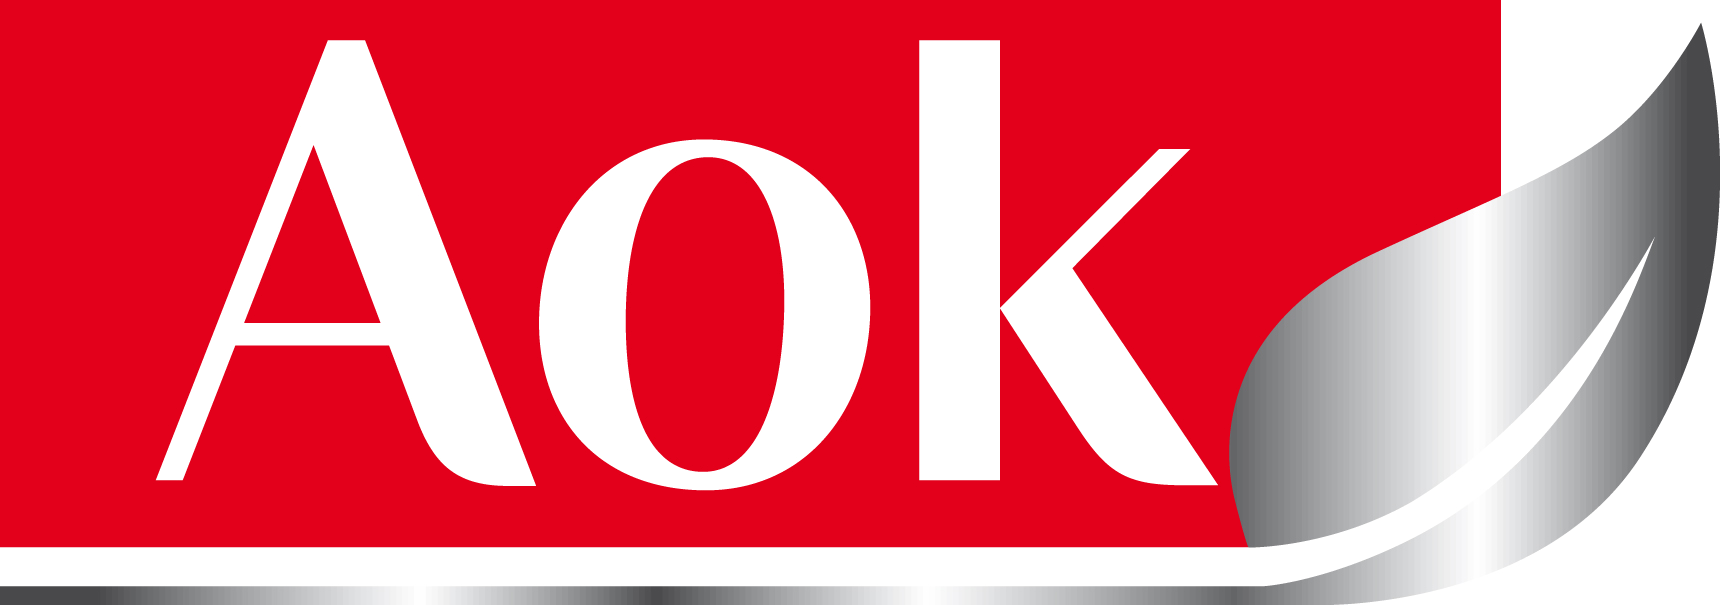 Logo Aok PNG - 38350